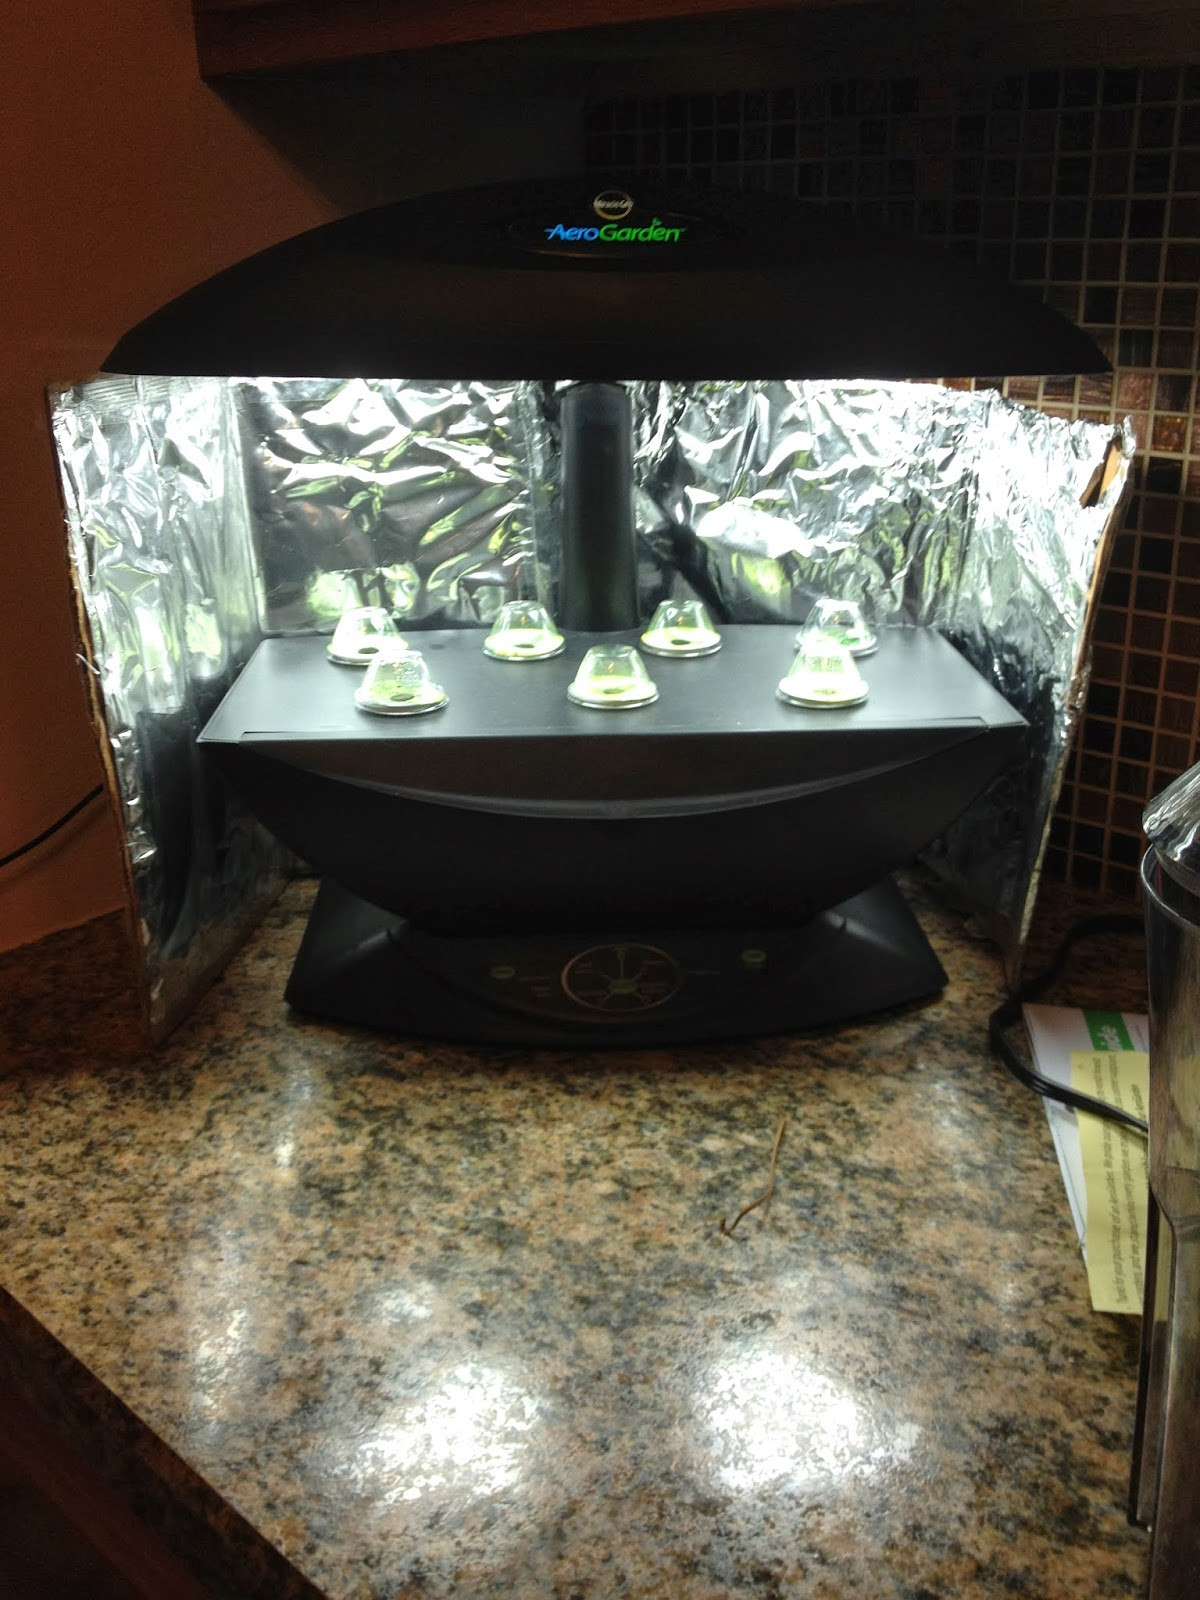 Best ideas about DIY Indoor Herb Garden With Grow Light
. Save or Pin DIY Aerogarden 7 Reflector Power Grow Light Booster Now.